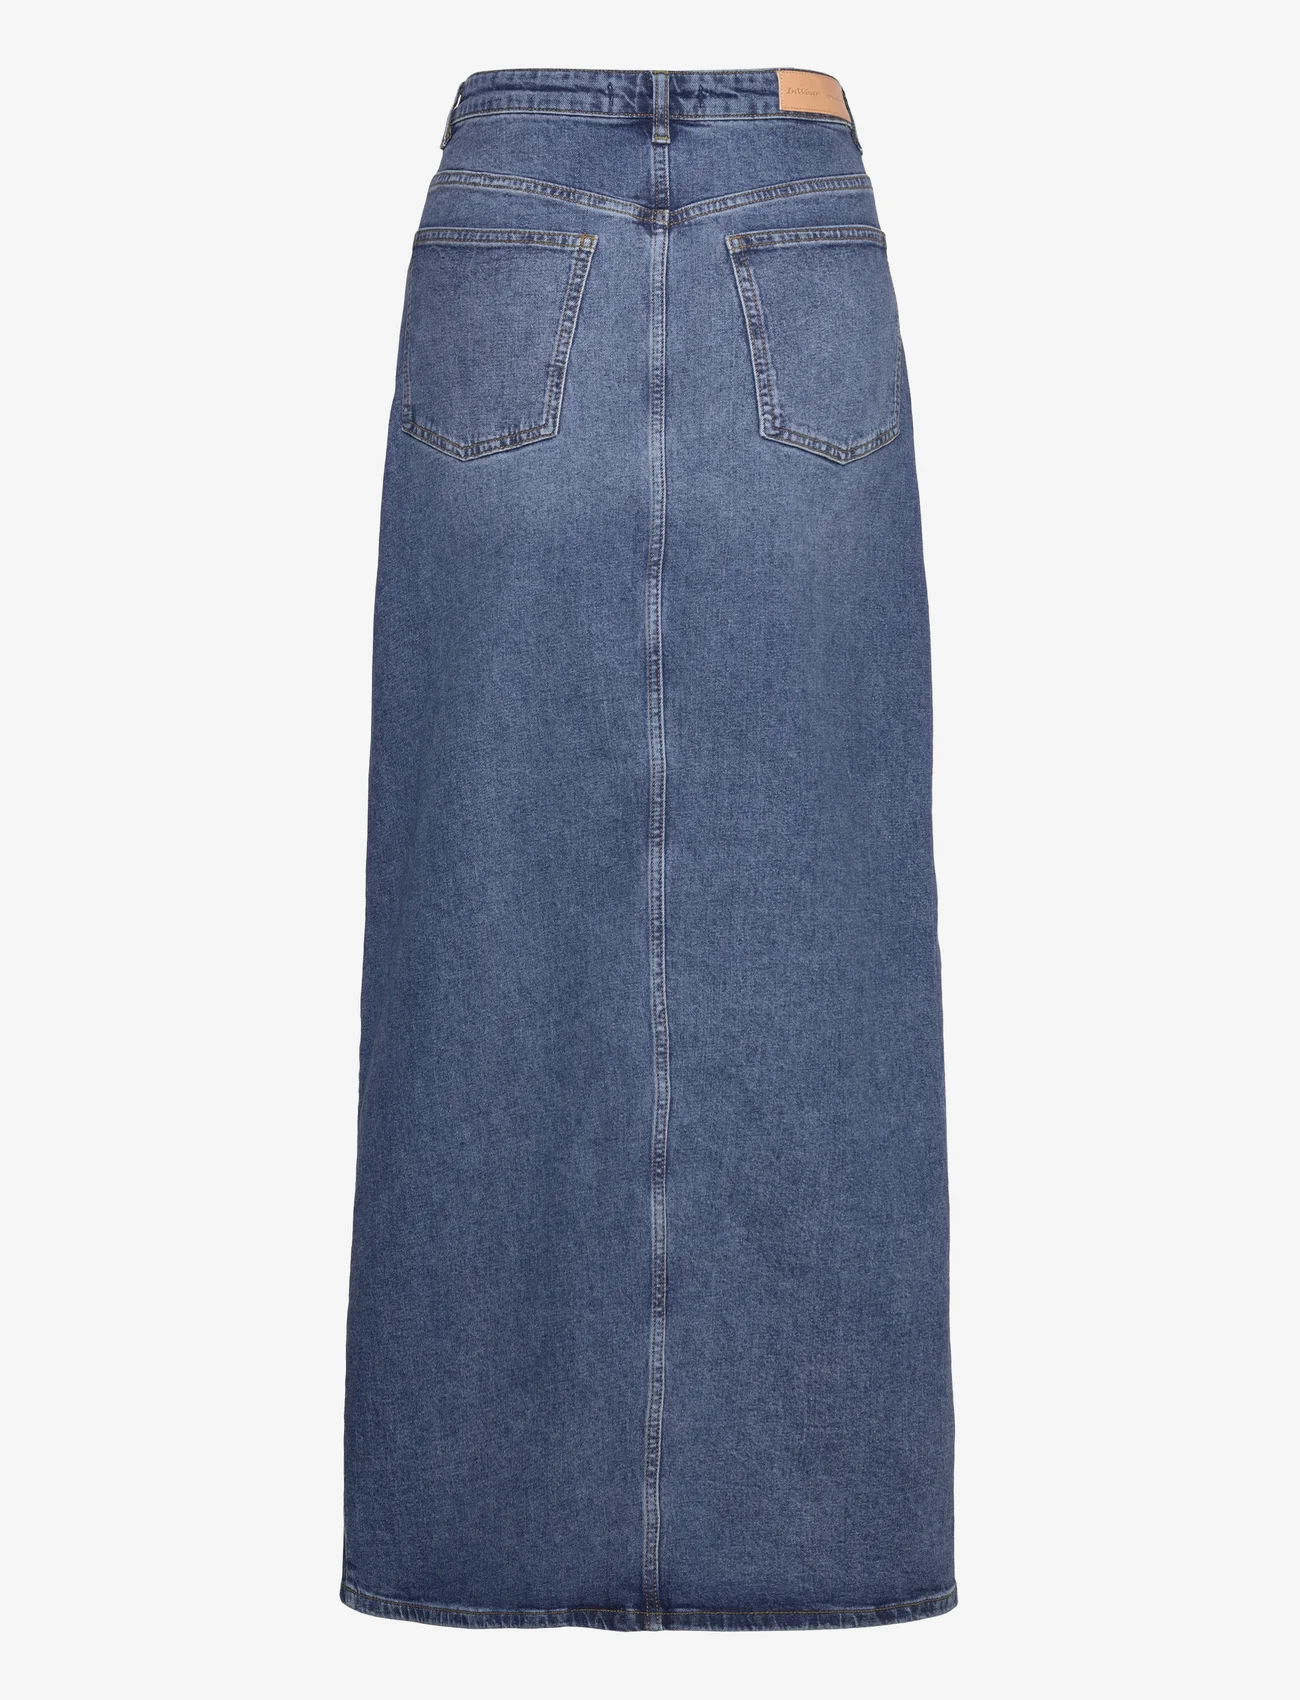 InWear - PheifferIW Long Skirt - jeansröcke - medium blue - 1